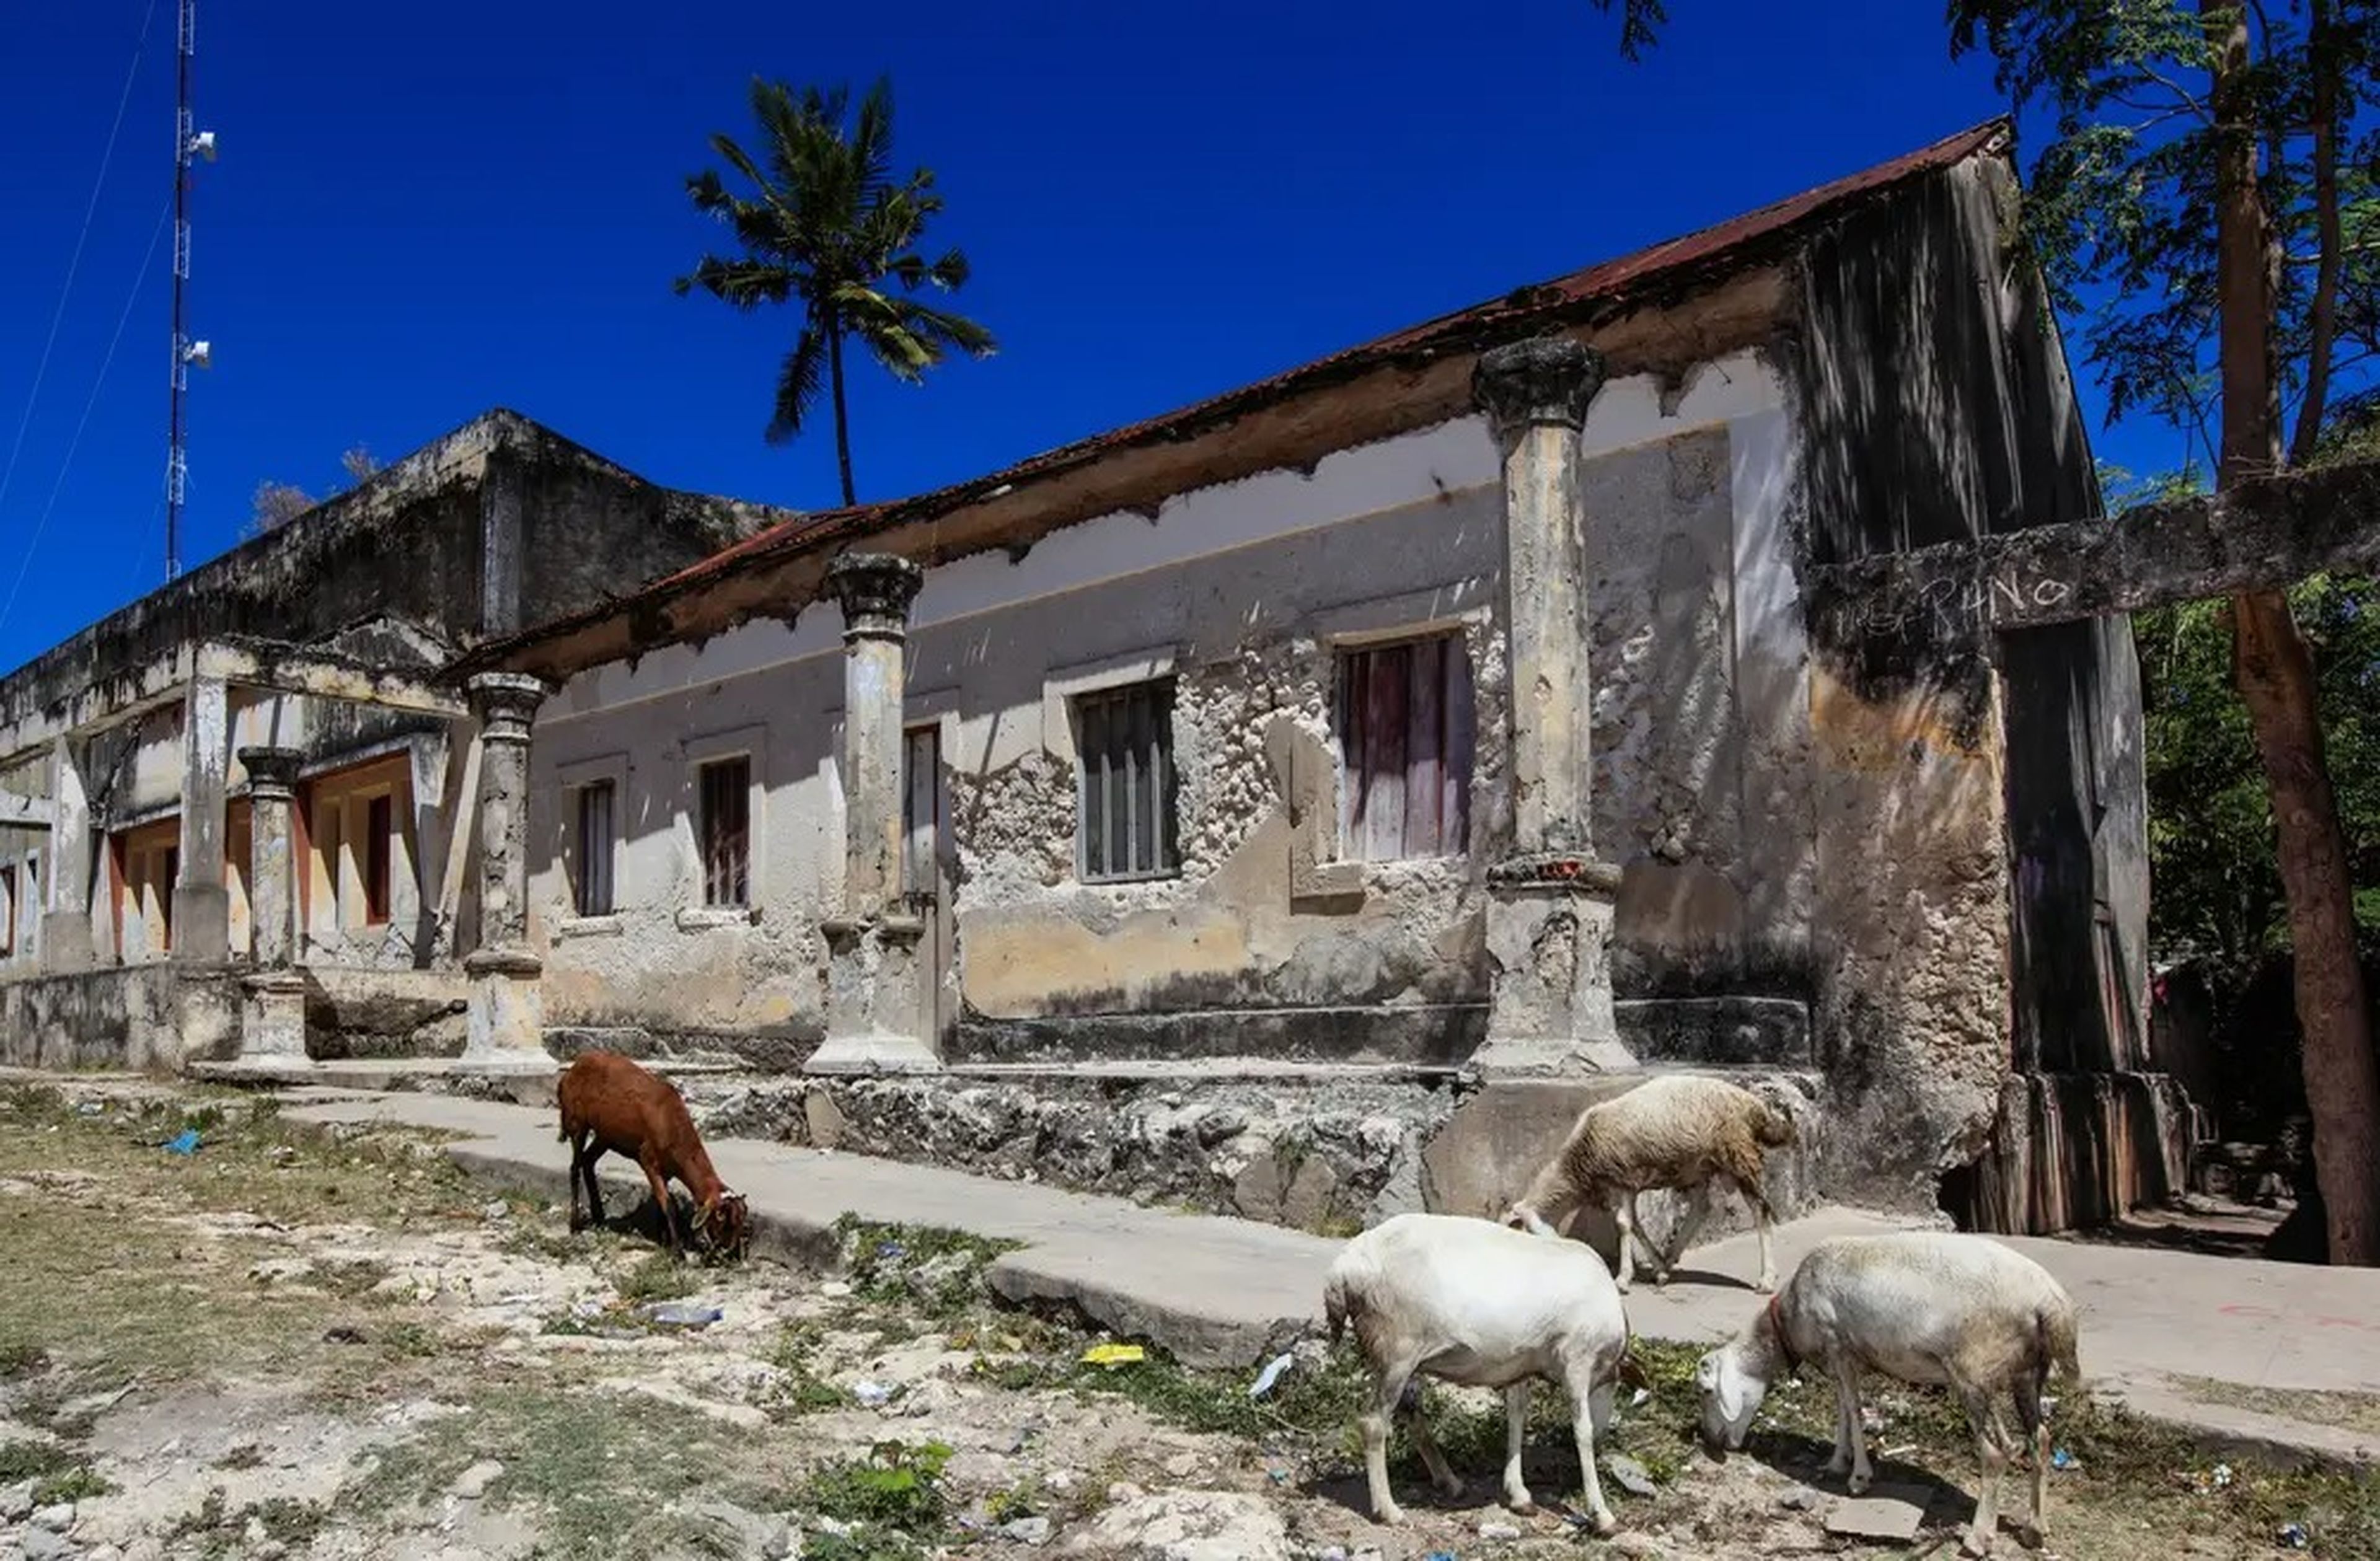 Goats roaming on Ibo Island